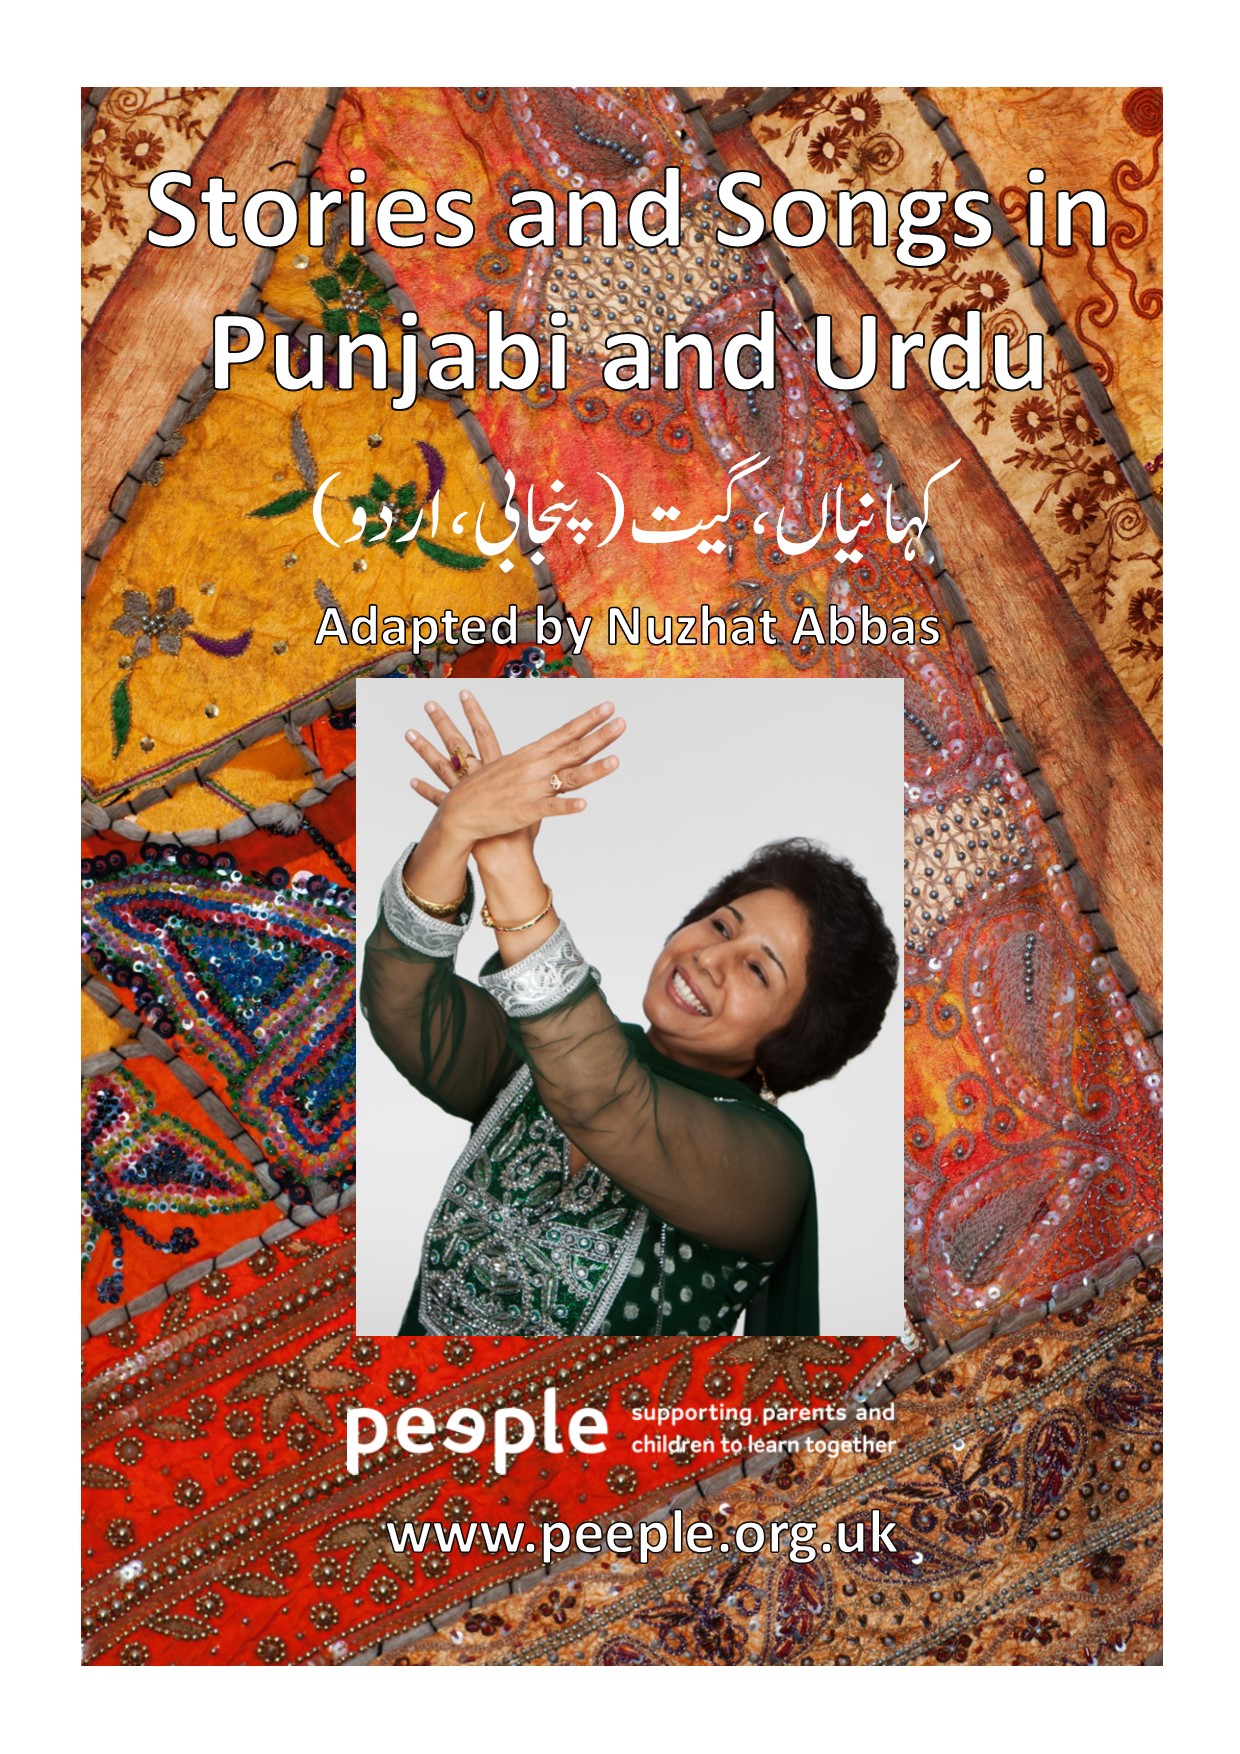 Stories and songs in Punjabi and Urdu